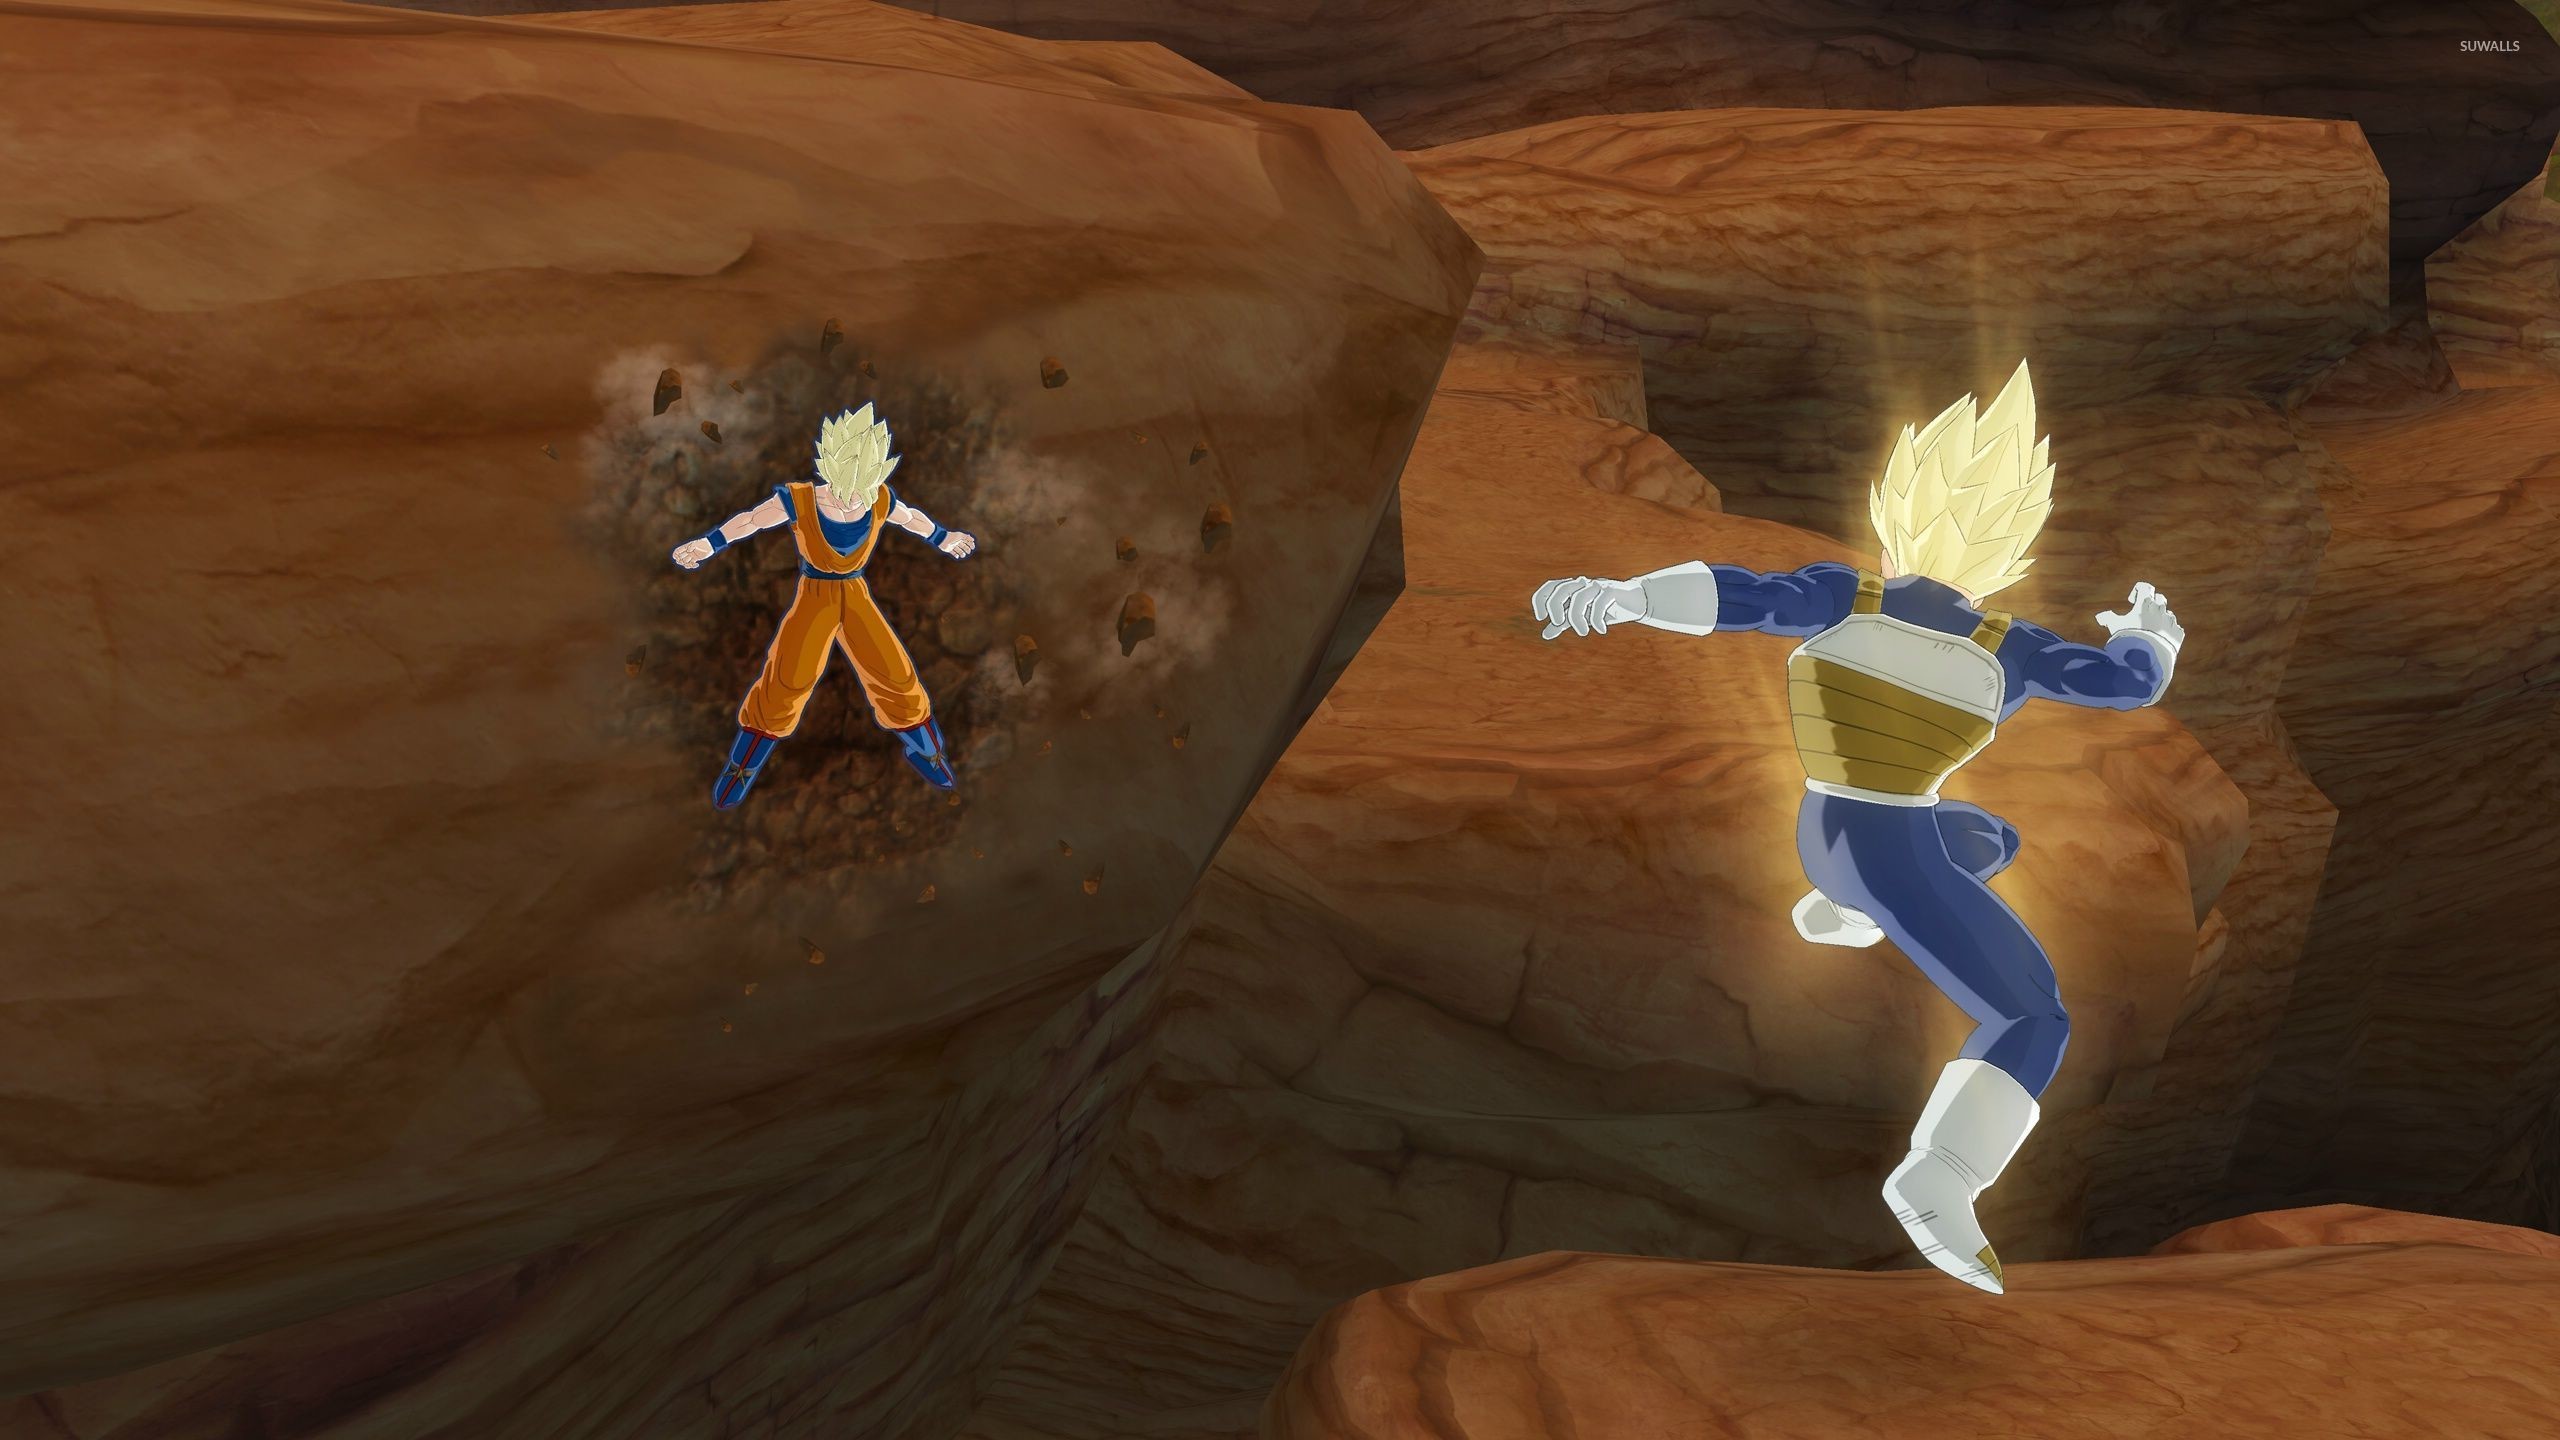 Vegeta vs Goku in Dragon Ball Z wallpaper jpg